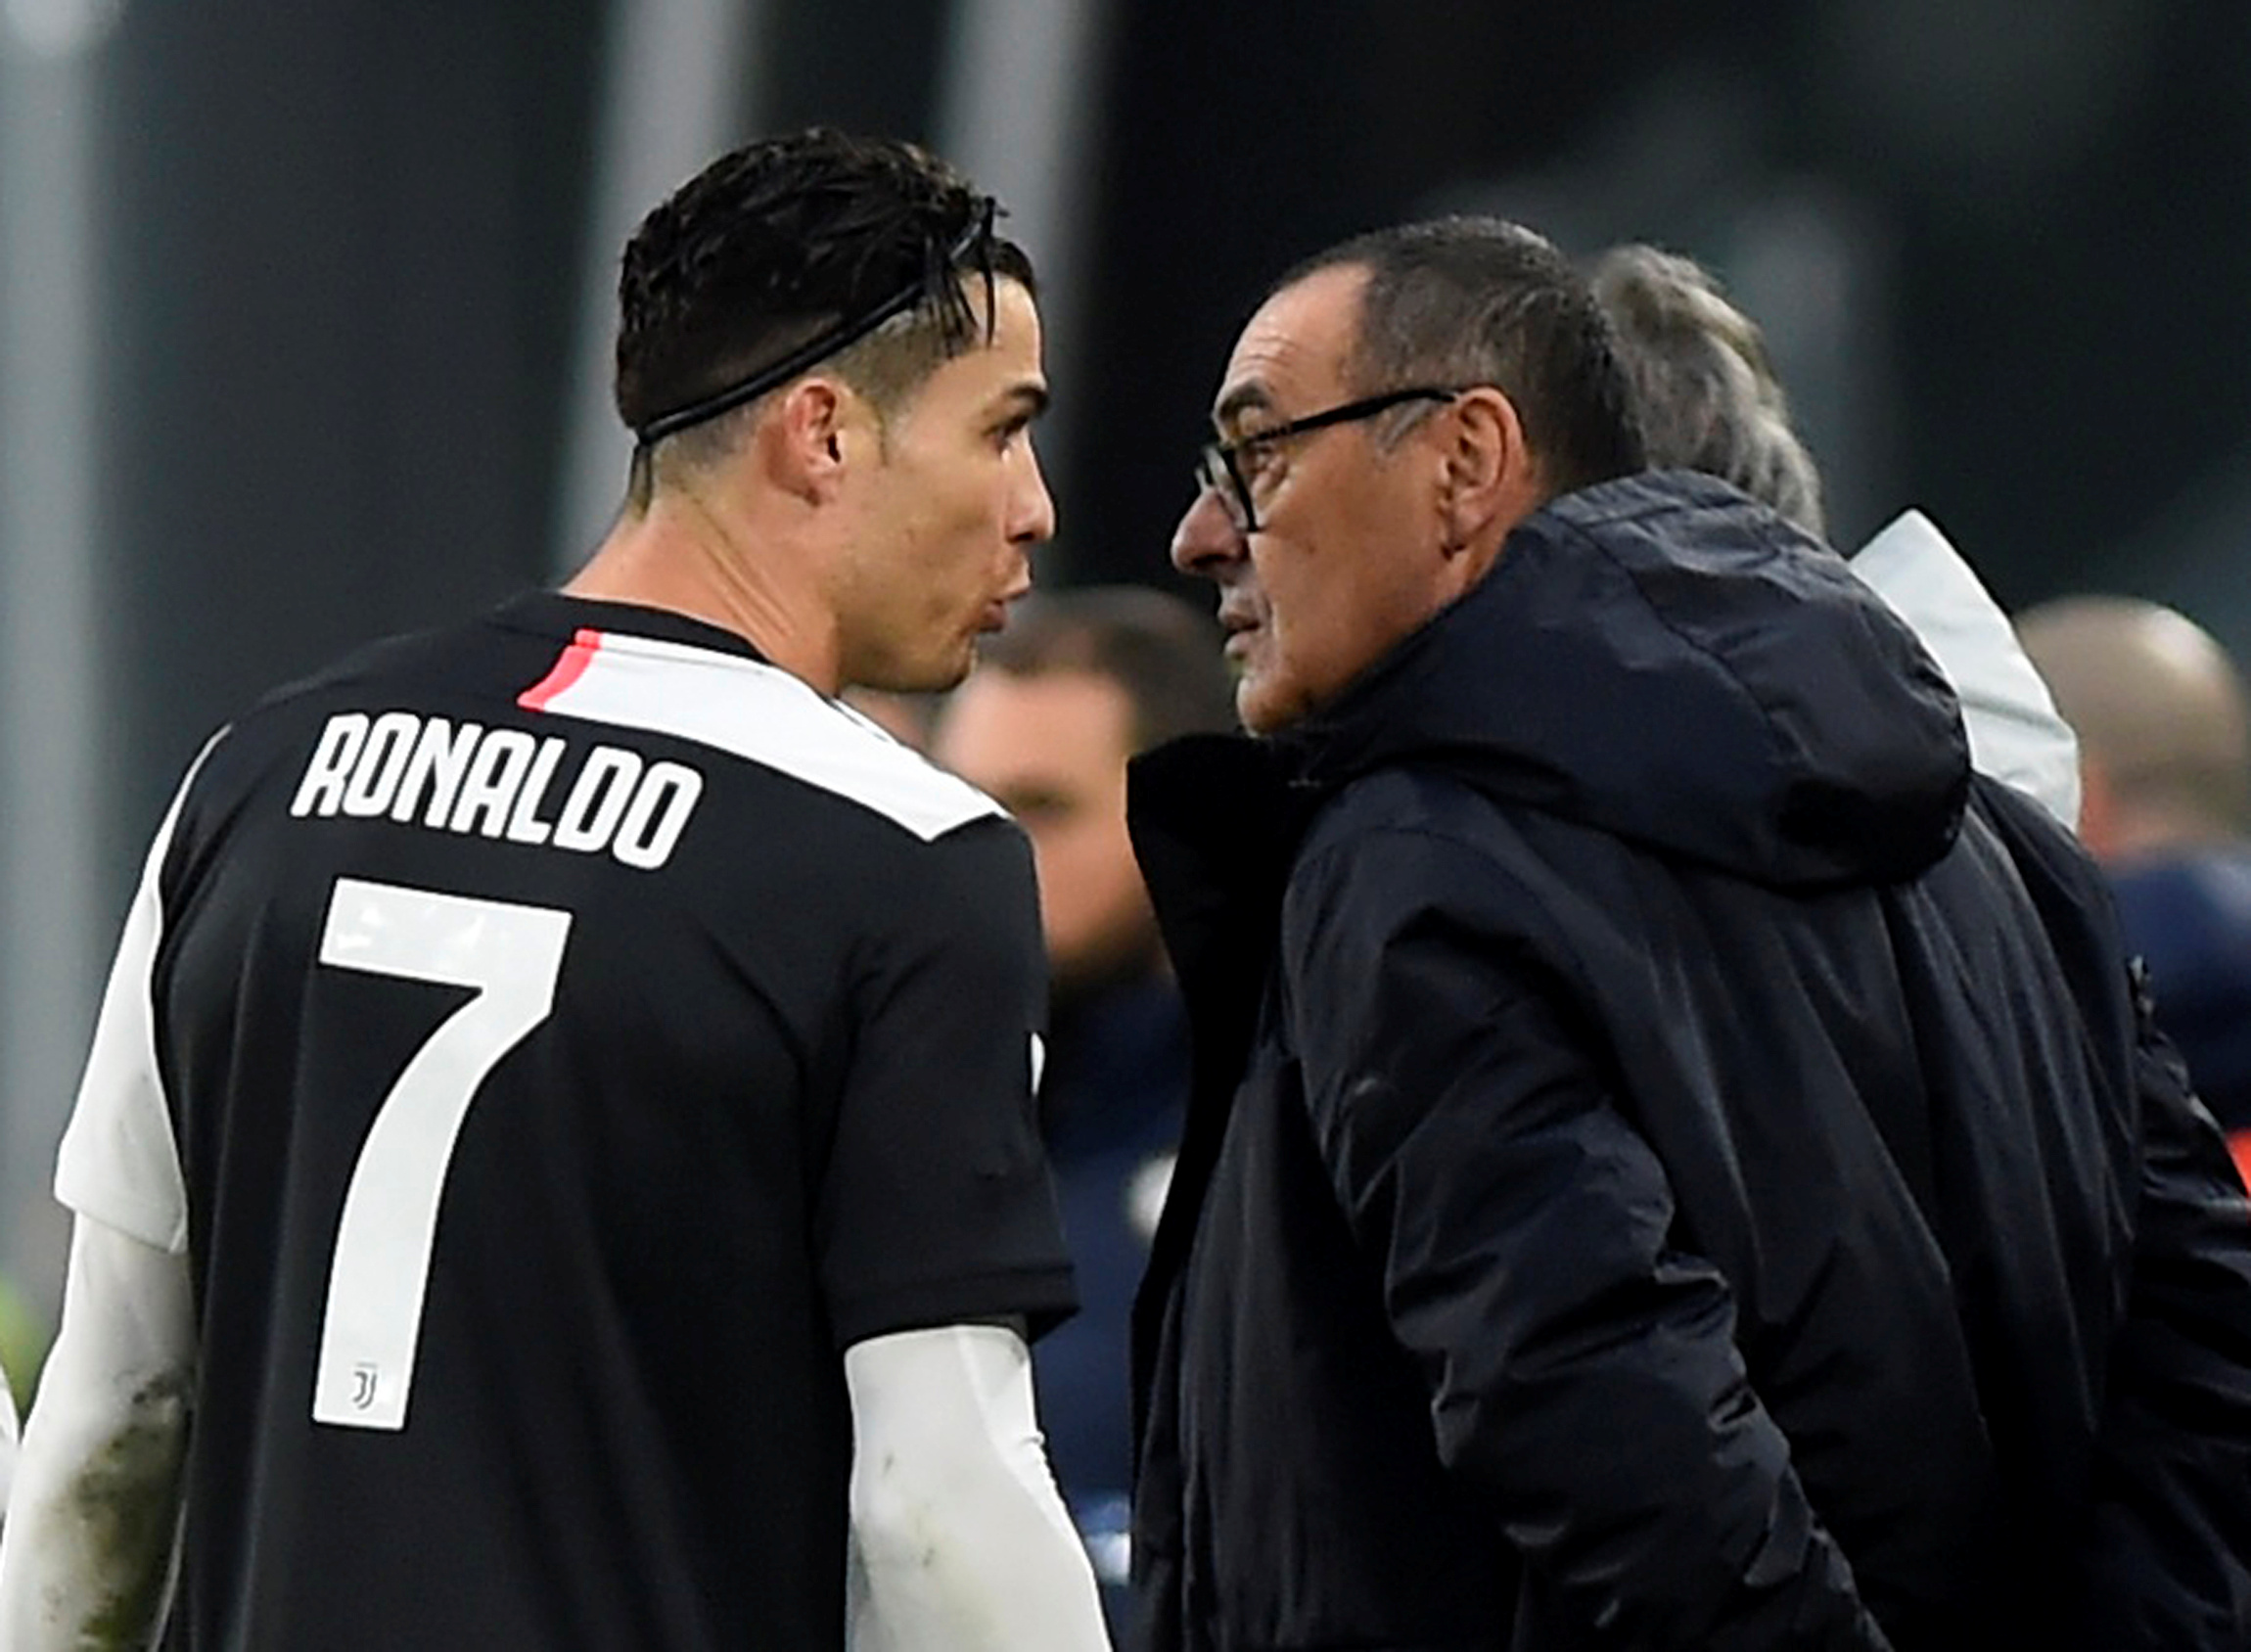 La hermana de Cristiano Ronaldo apuntó a Maurizio Sarri tras la derrota por penales ante Napoli en la final de la Copa Italia (REUTERS/Massimo Pinca)